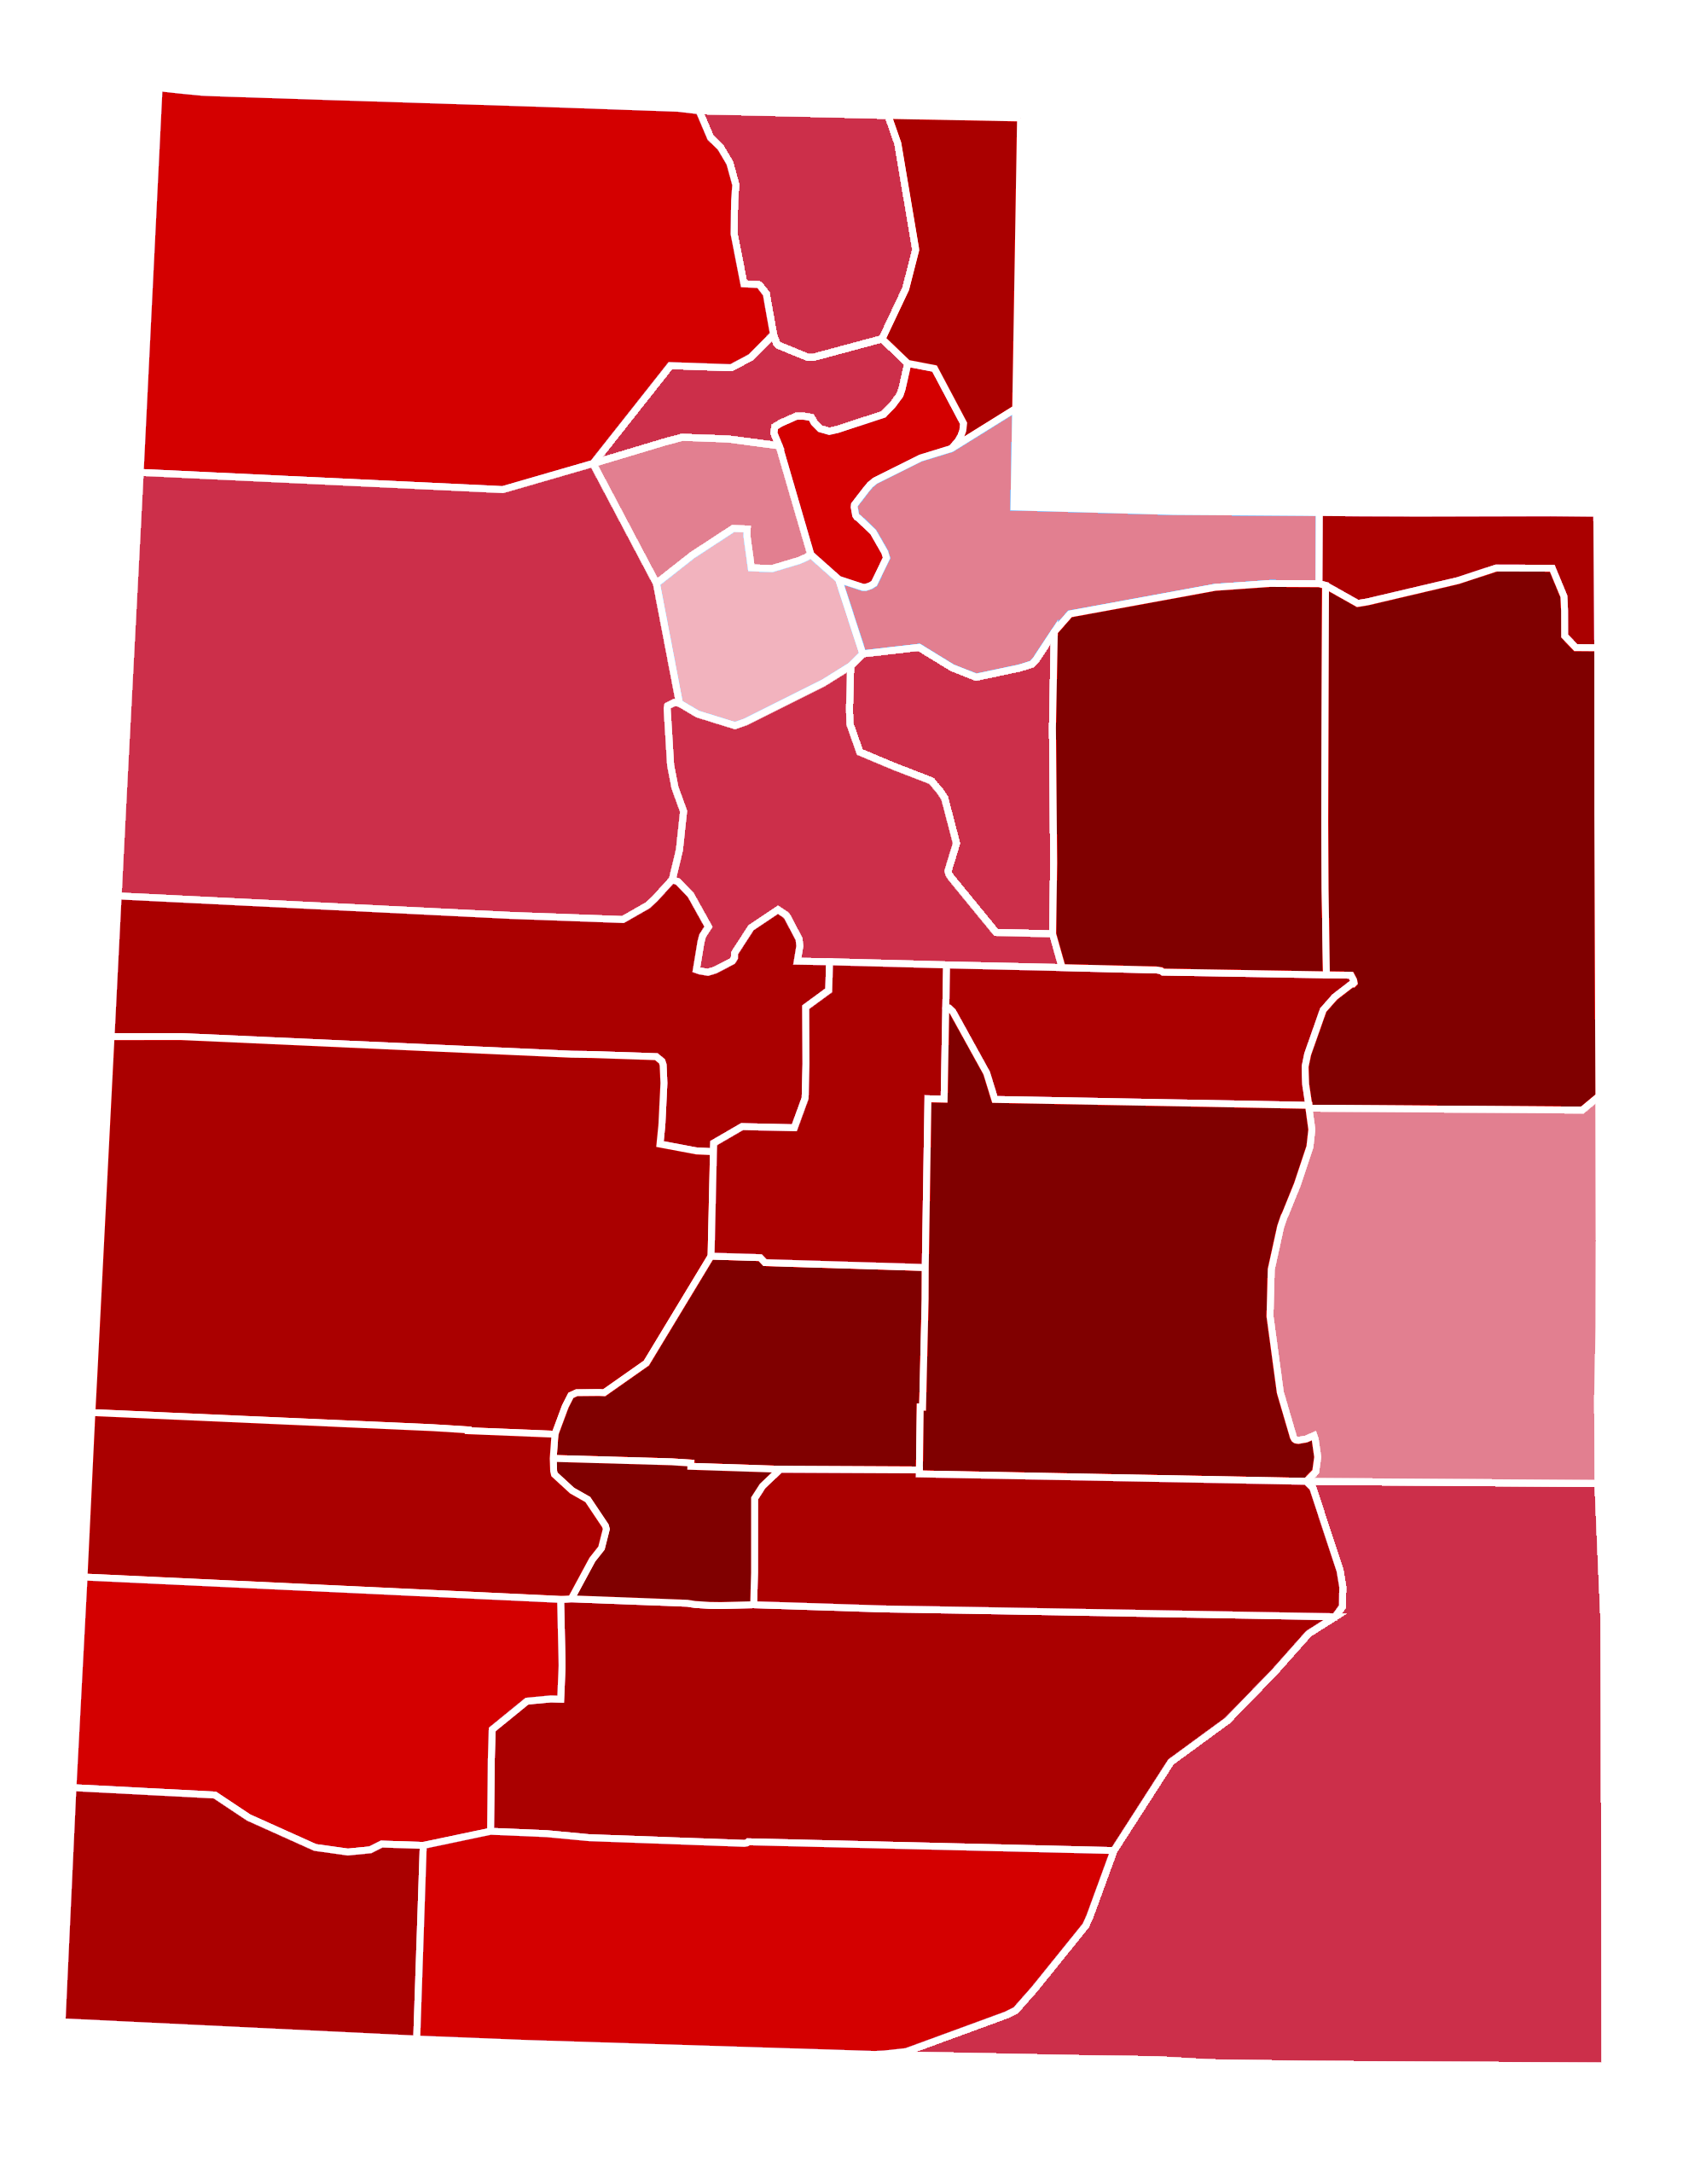 Utah_Presidential_Election_Results_2016_Republican_Landslide_15.06%.png